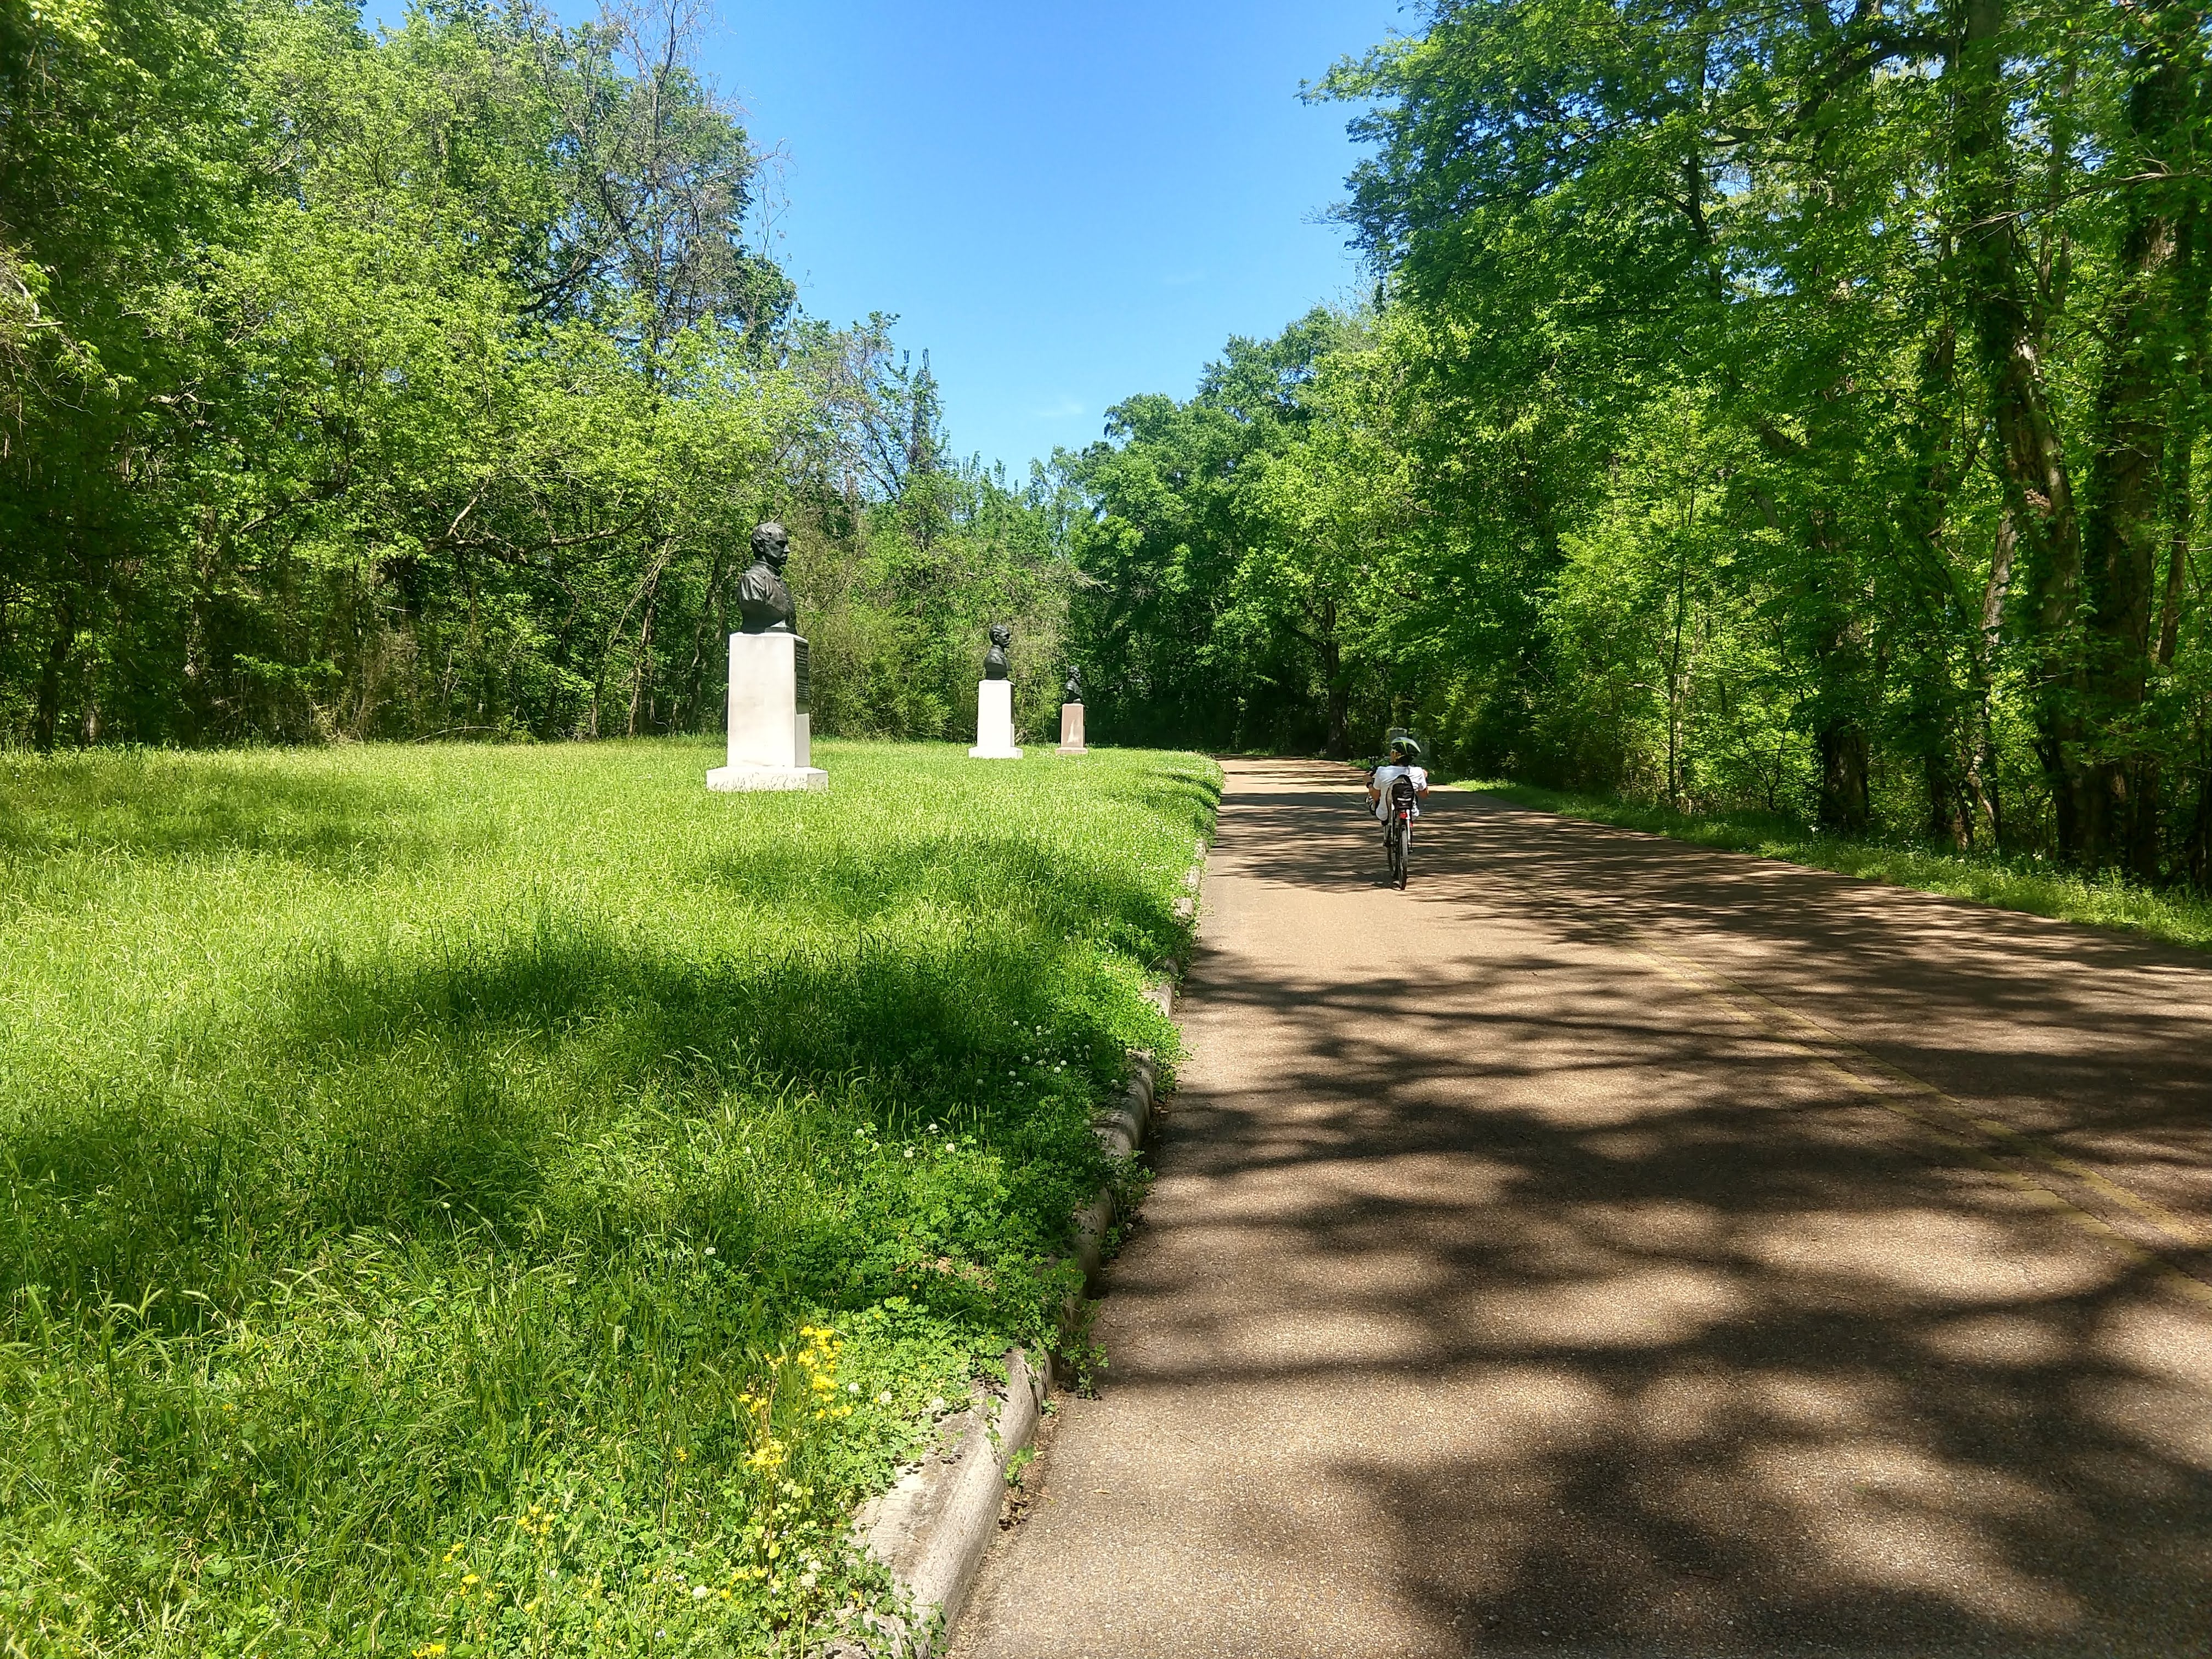 Cycling in Vicksburg National Military Park